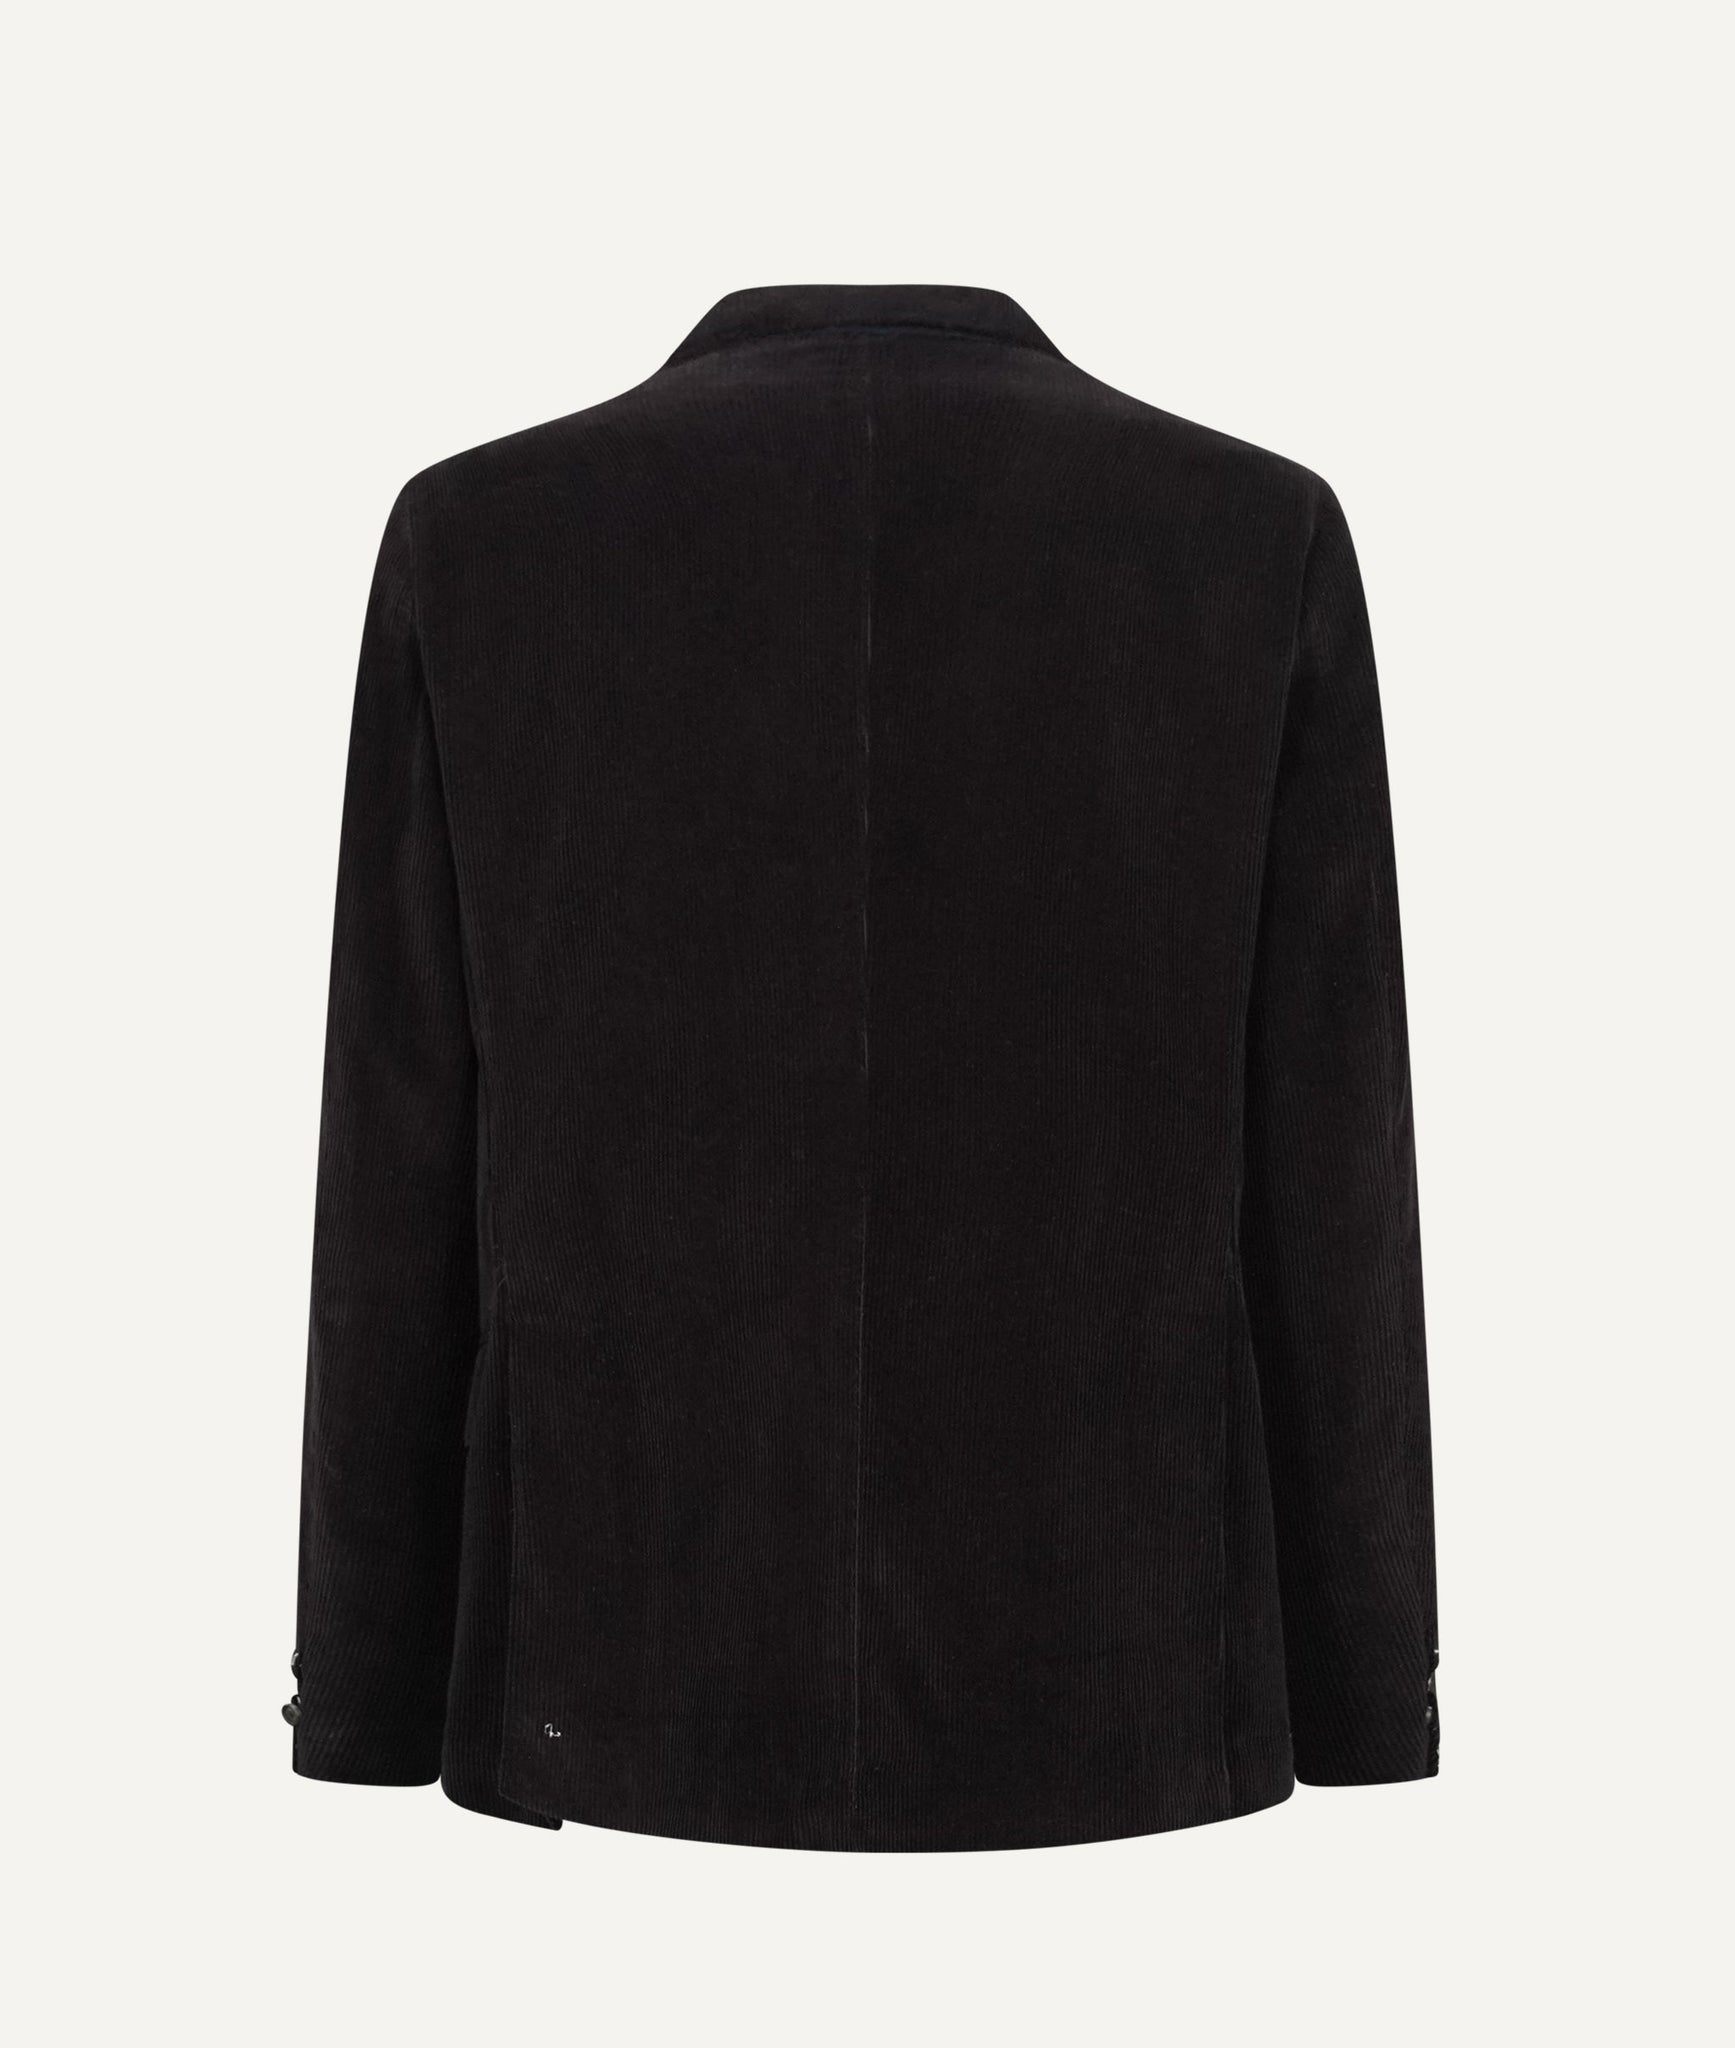 Eleventy - Double Breasted Blazer in Cotton & Cashmere